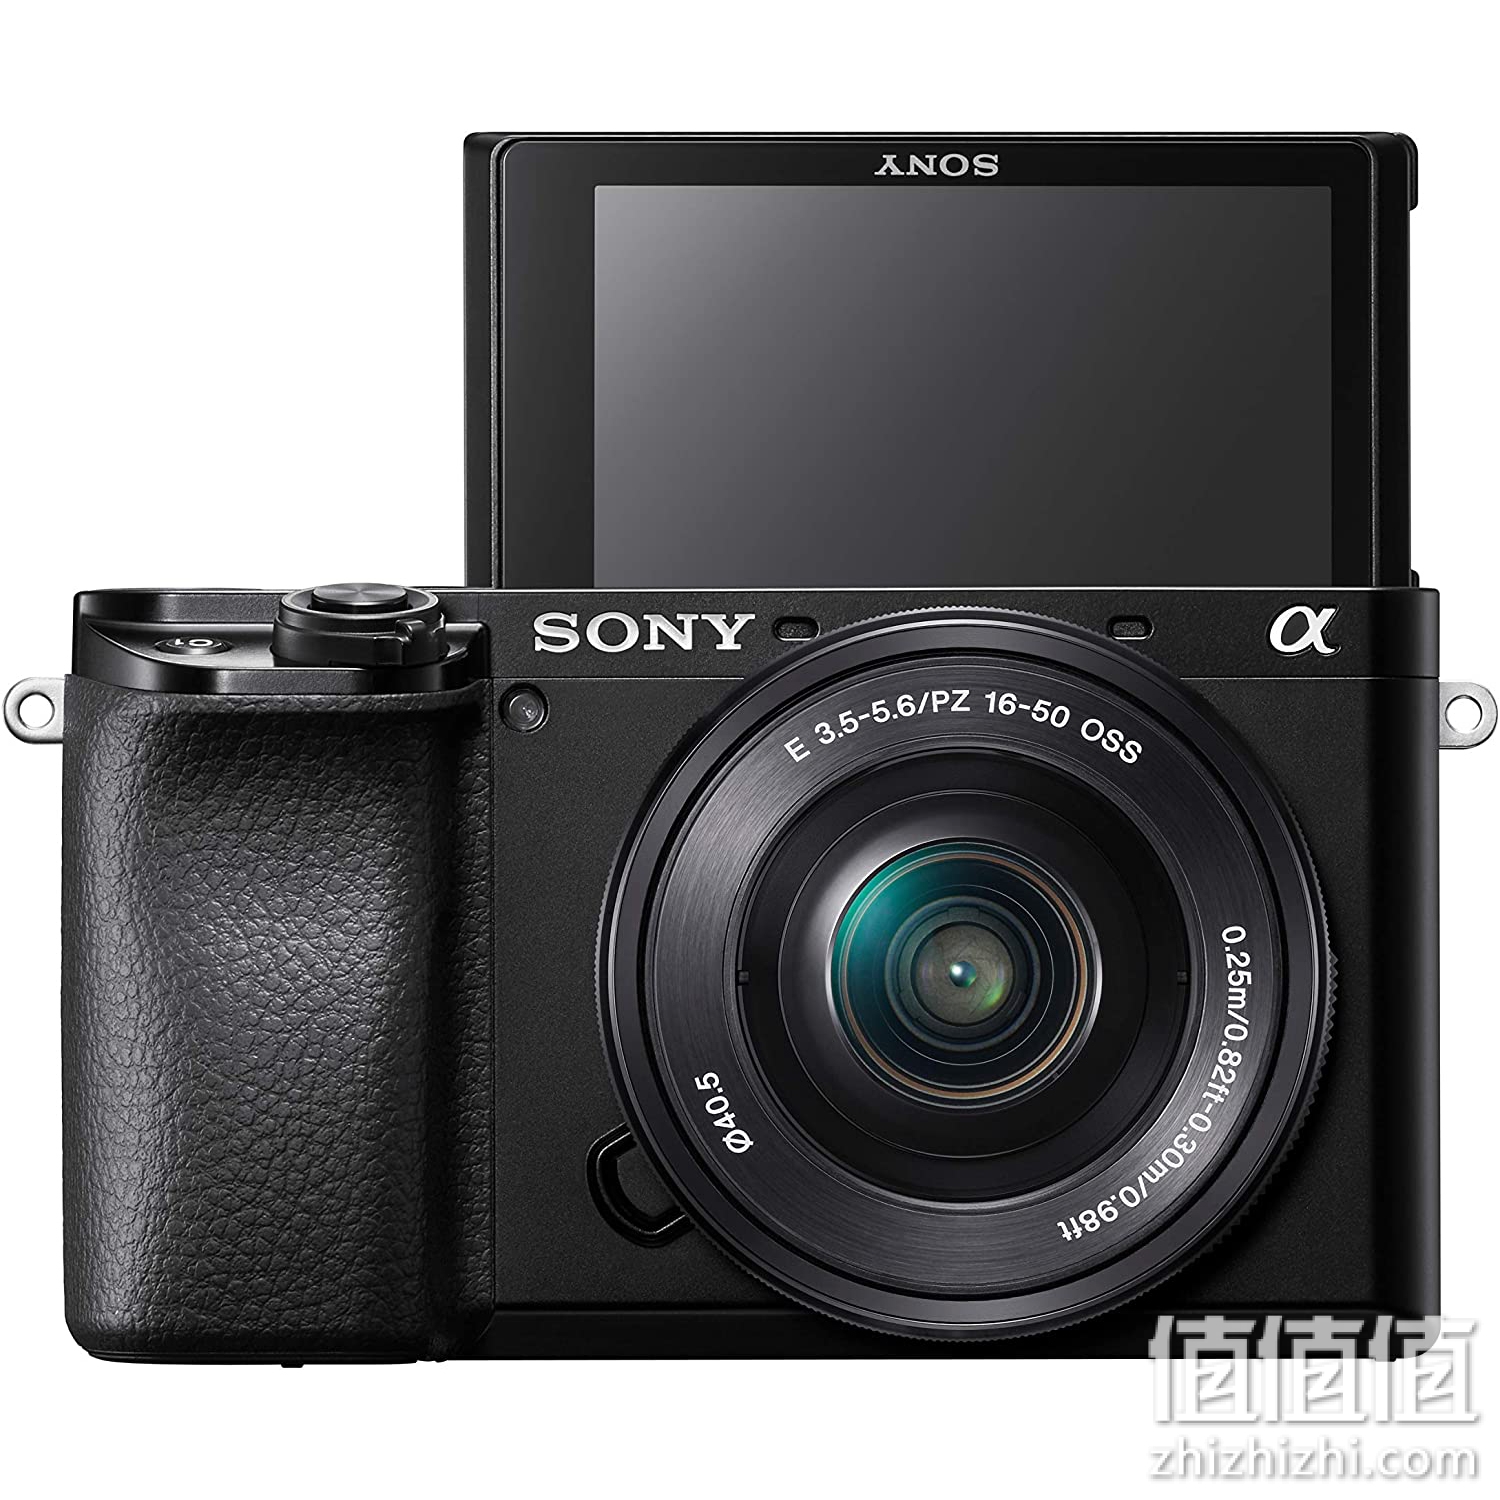 Sony 索尼 Alpha 6100 | APS-C 无反相机,带索尼 16-50 毫米 f/3.5-5.6 功率变焦镜头(快速 0.02s 自动对焦,*跟踪自动对焦,适用于人类和动物,4K 电影录制和翻转屏幕)